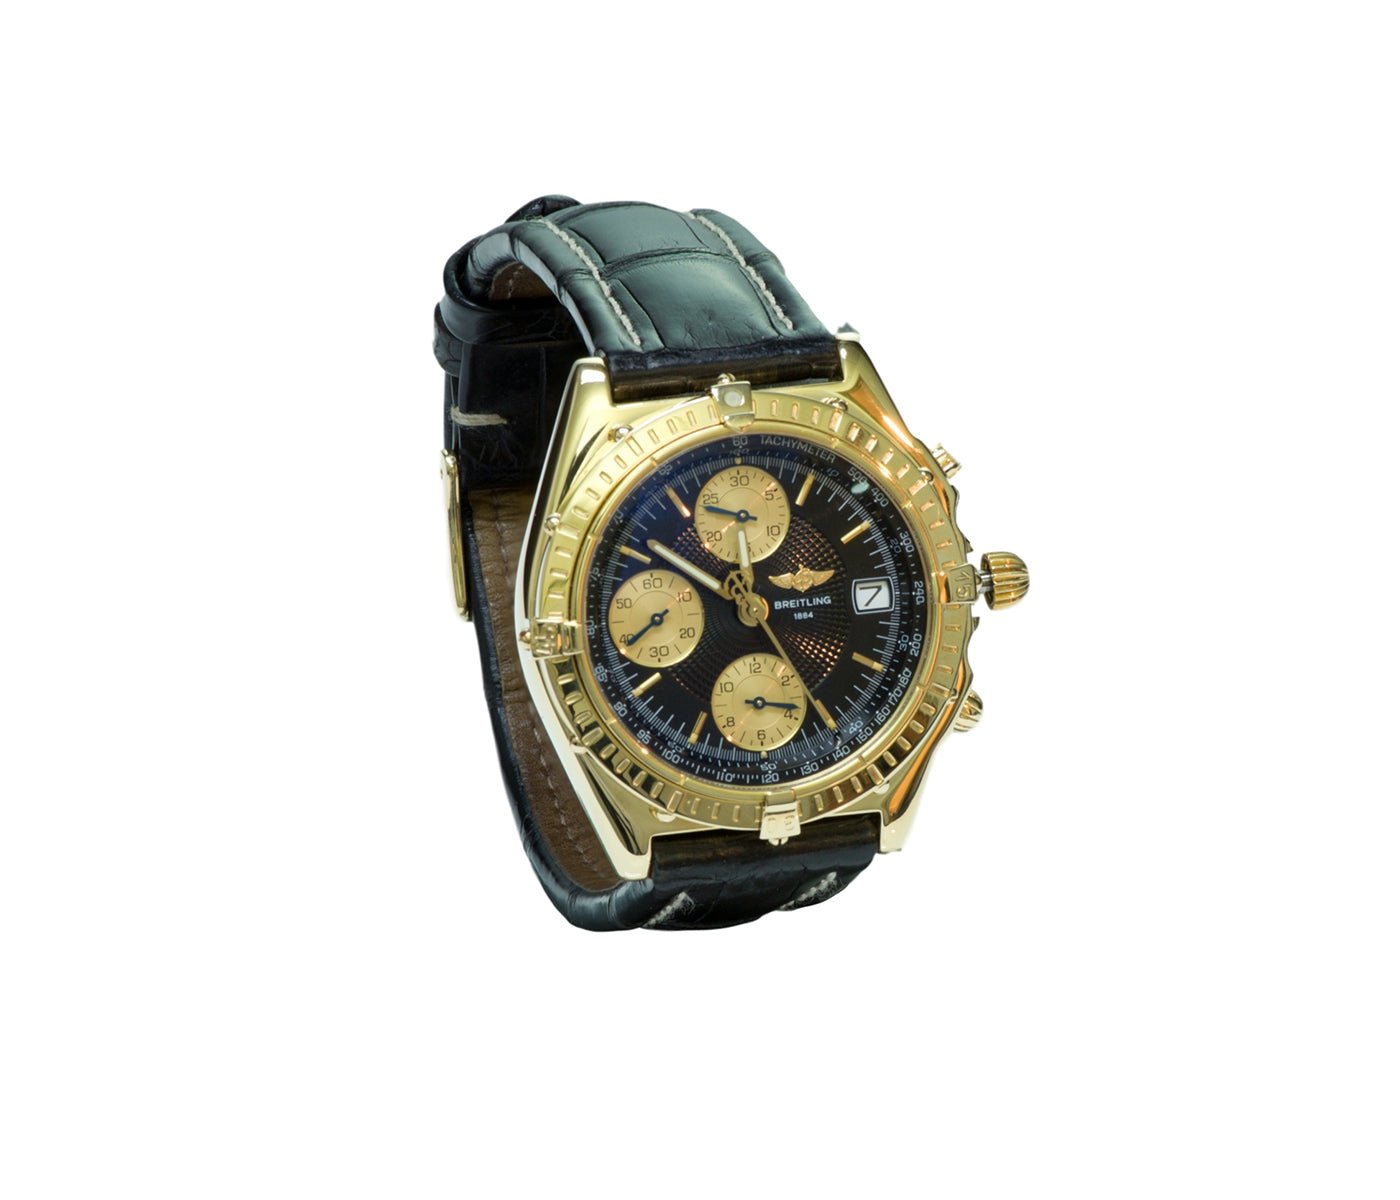 Breitling Chronomat Vitesse K13050.1 18K Gold Automatic Watch